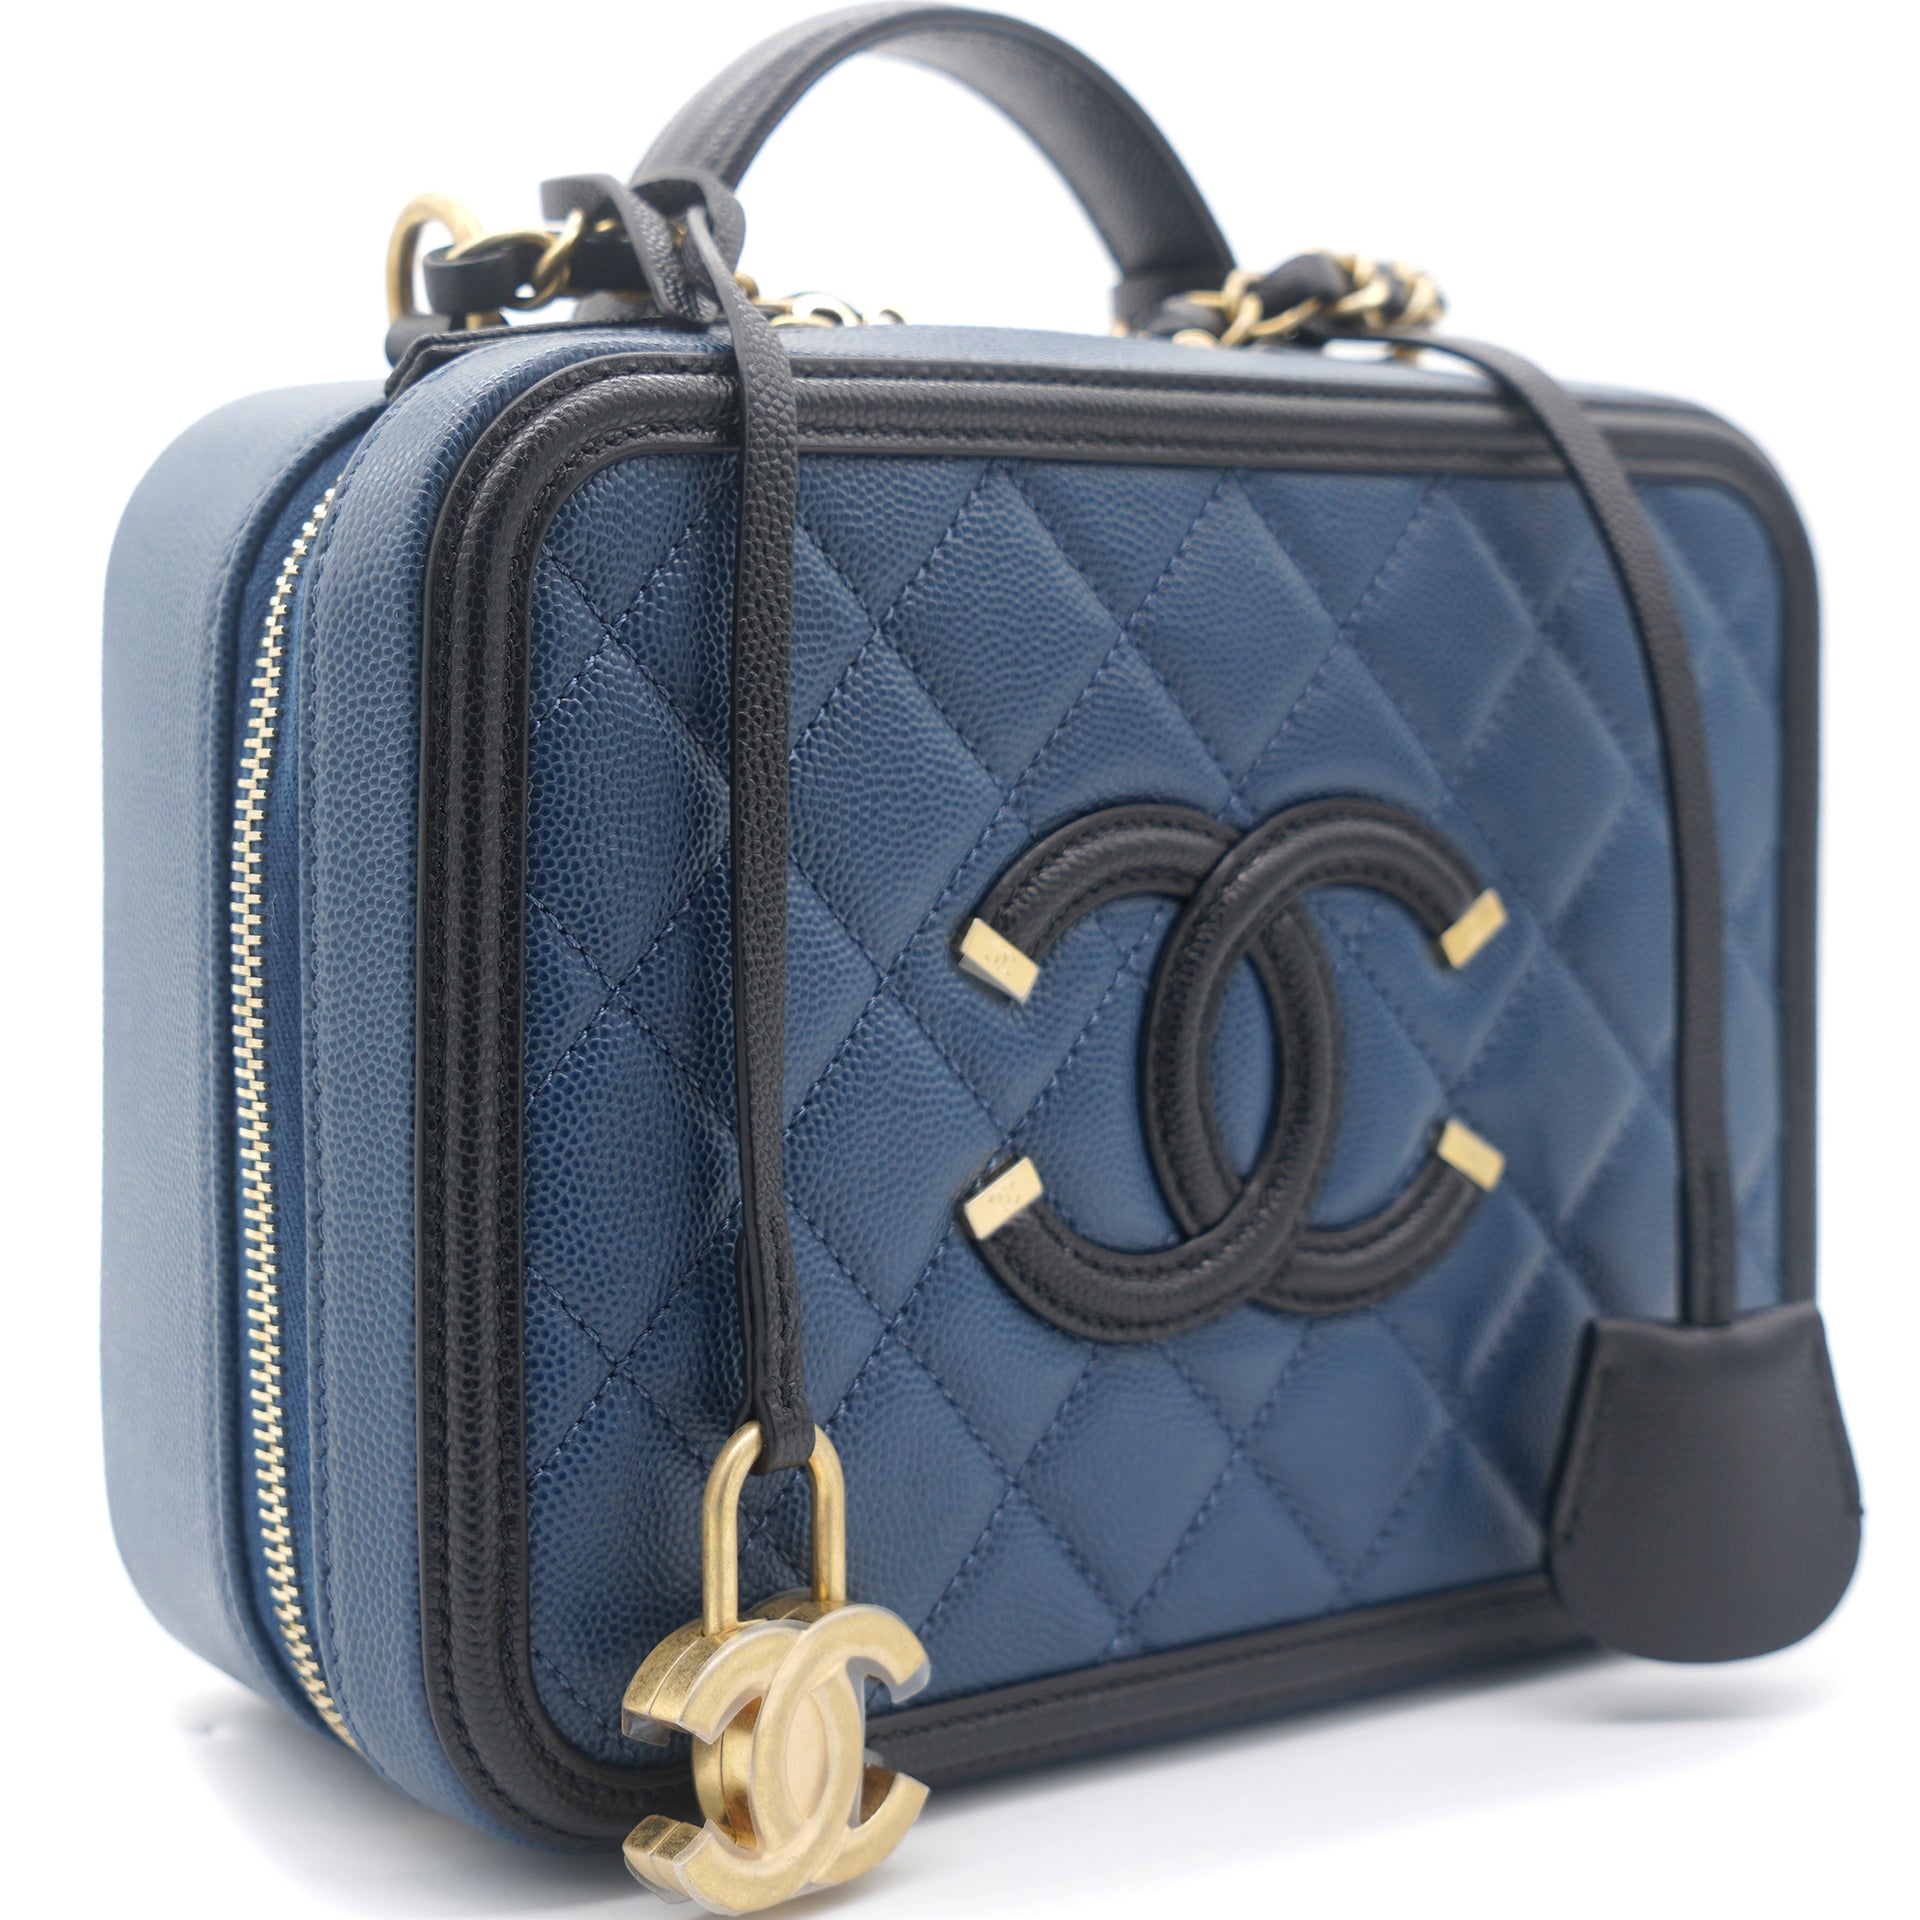 Authenticated Chanel CC Filigree Caviar Vanity Case Black Leather Bag